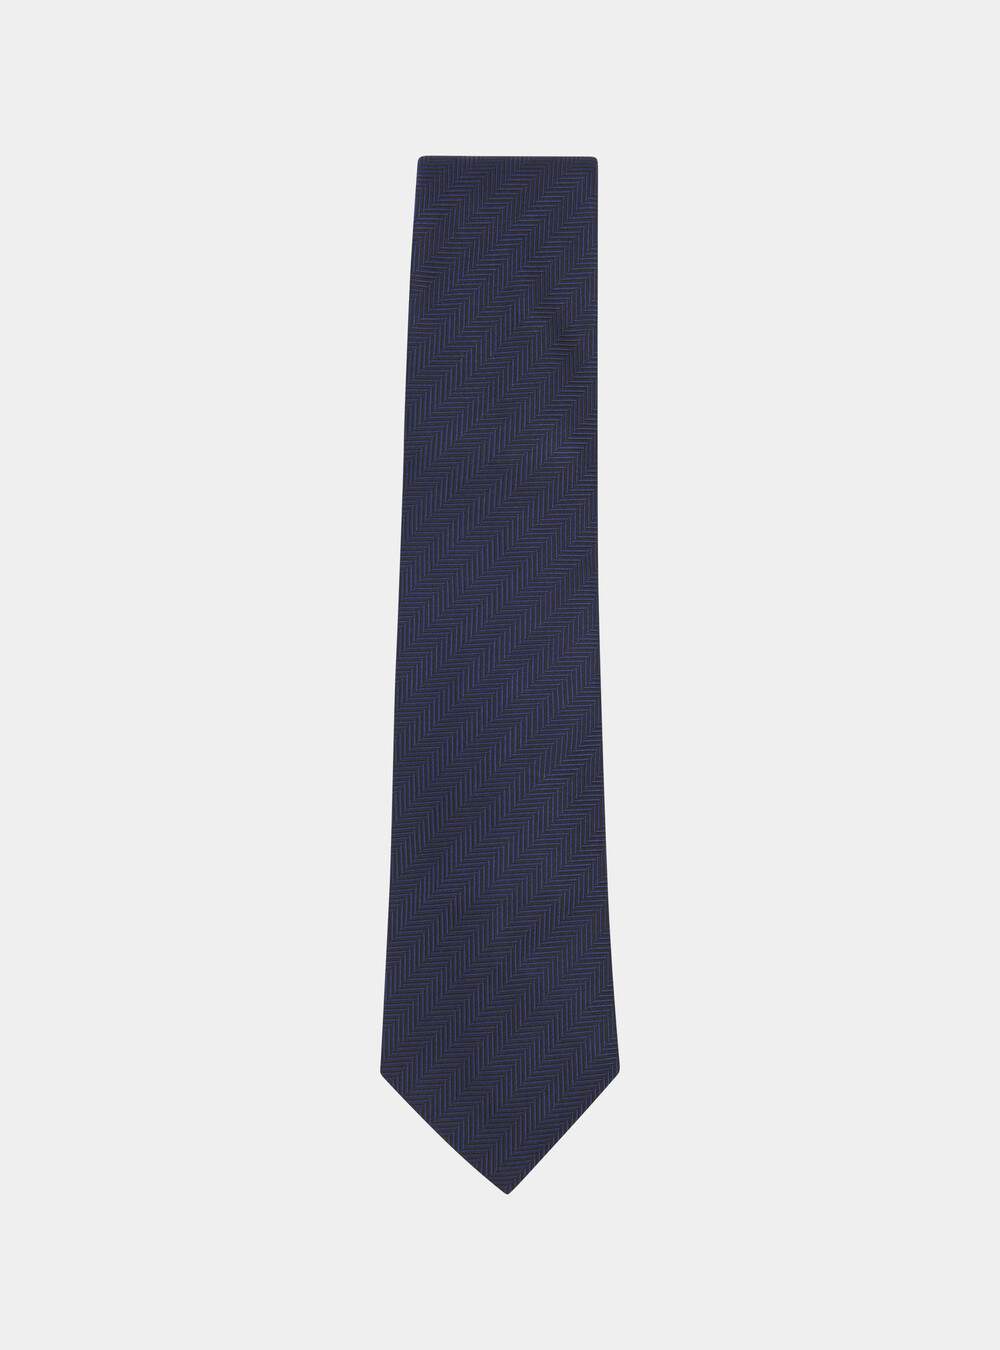 Cravatte Da Uomo | Gutteridge 1878 | Vendita Cravatte Da Uomo